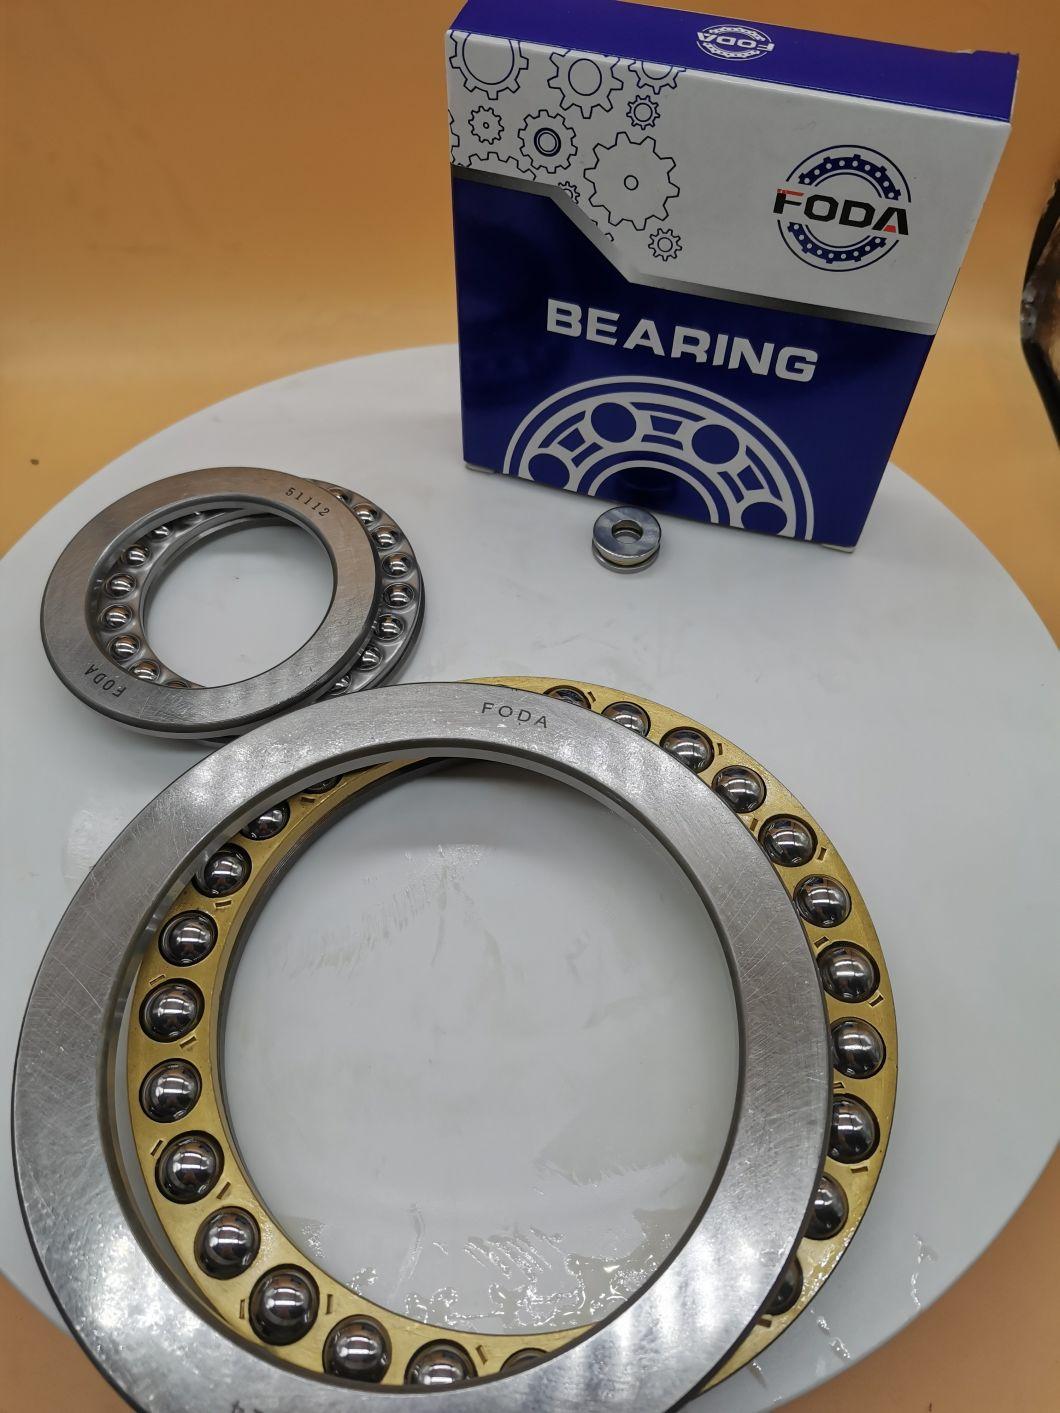 Foda Factory Supplies Big Thrust Ball Bearings/Low Speed Reducer/Foda High Quality Bearings Instead of Bearings/Thrust Ball Bearings of 51330m